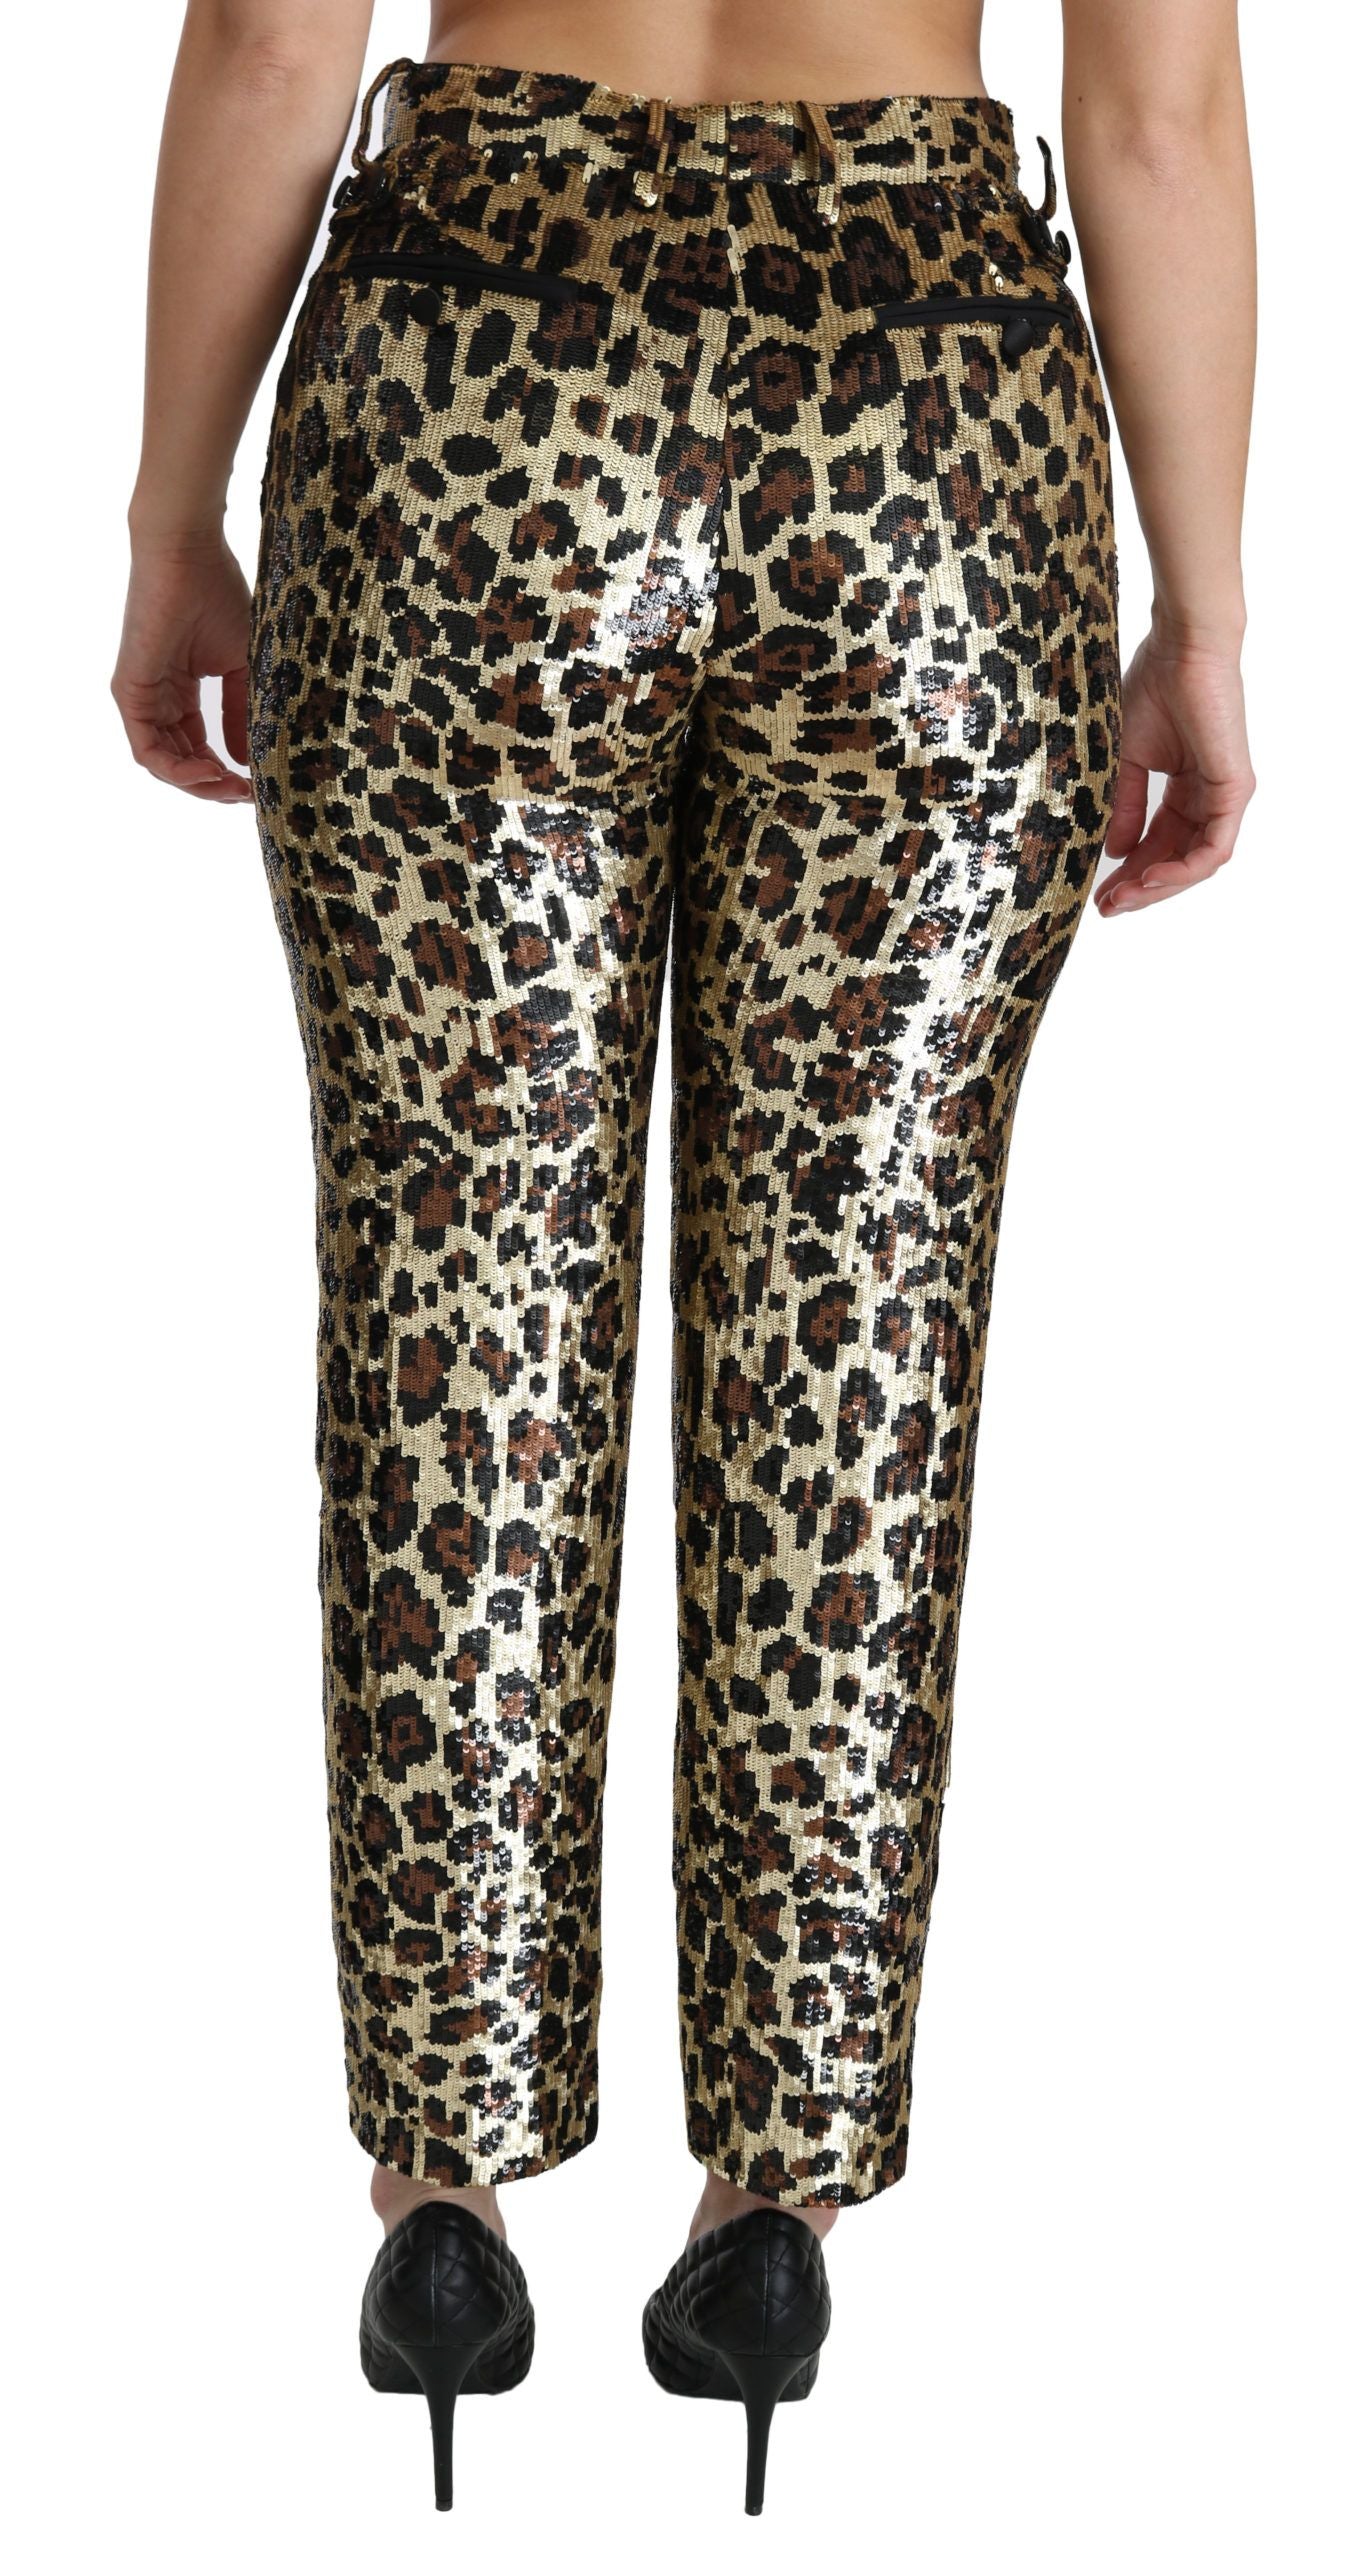 Chic High Waist Leopard Sequin Pants